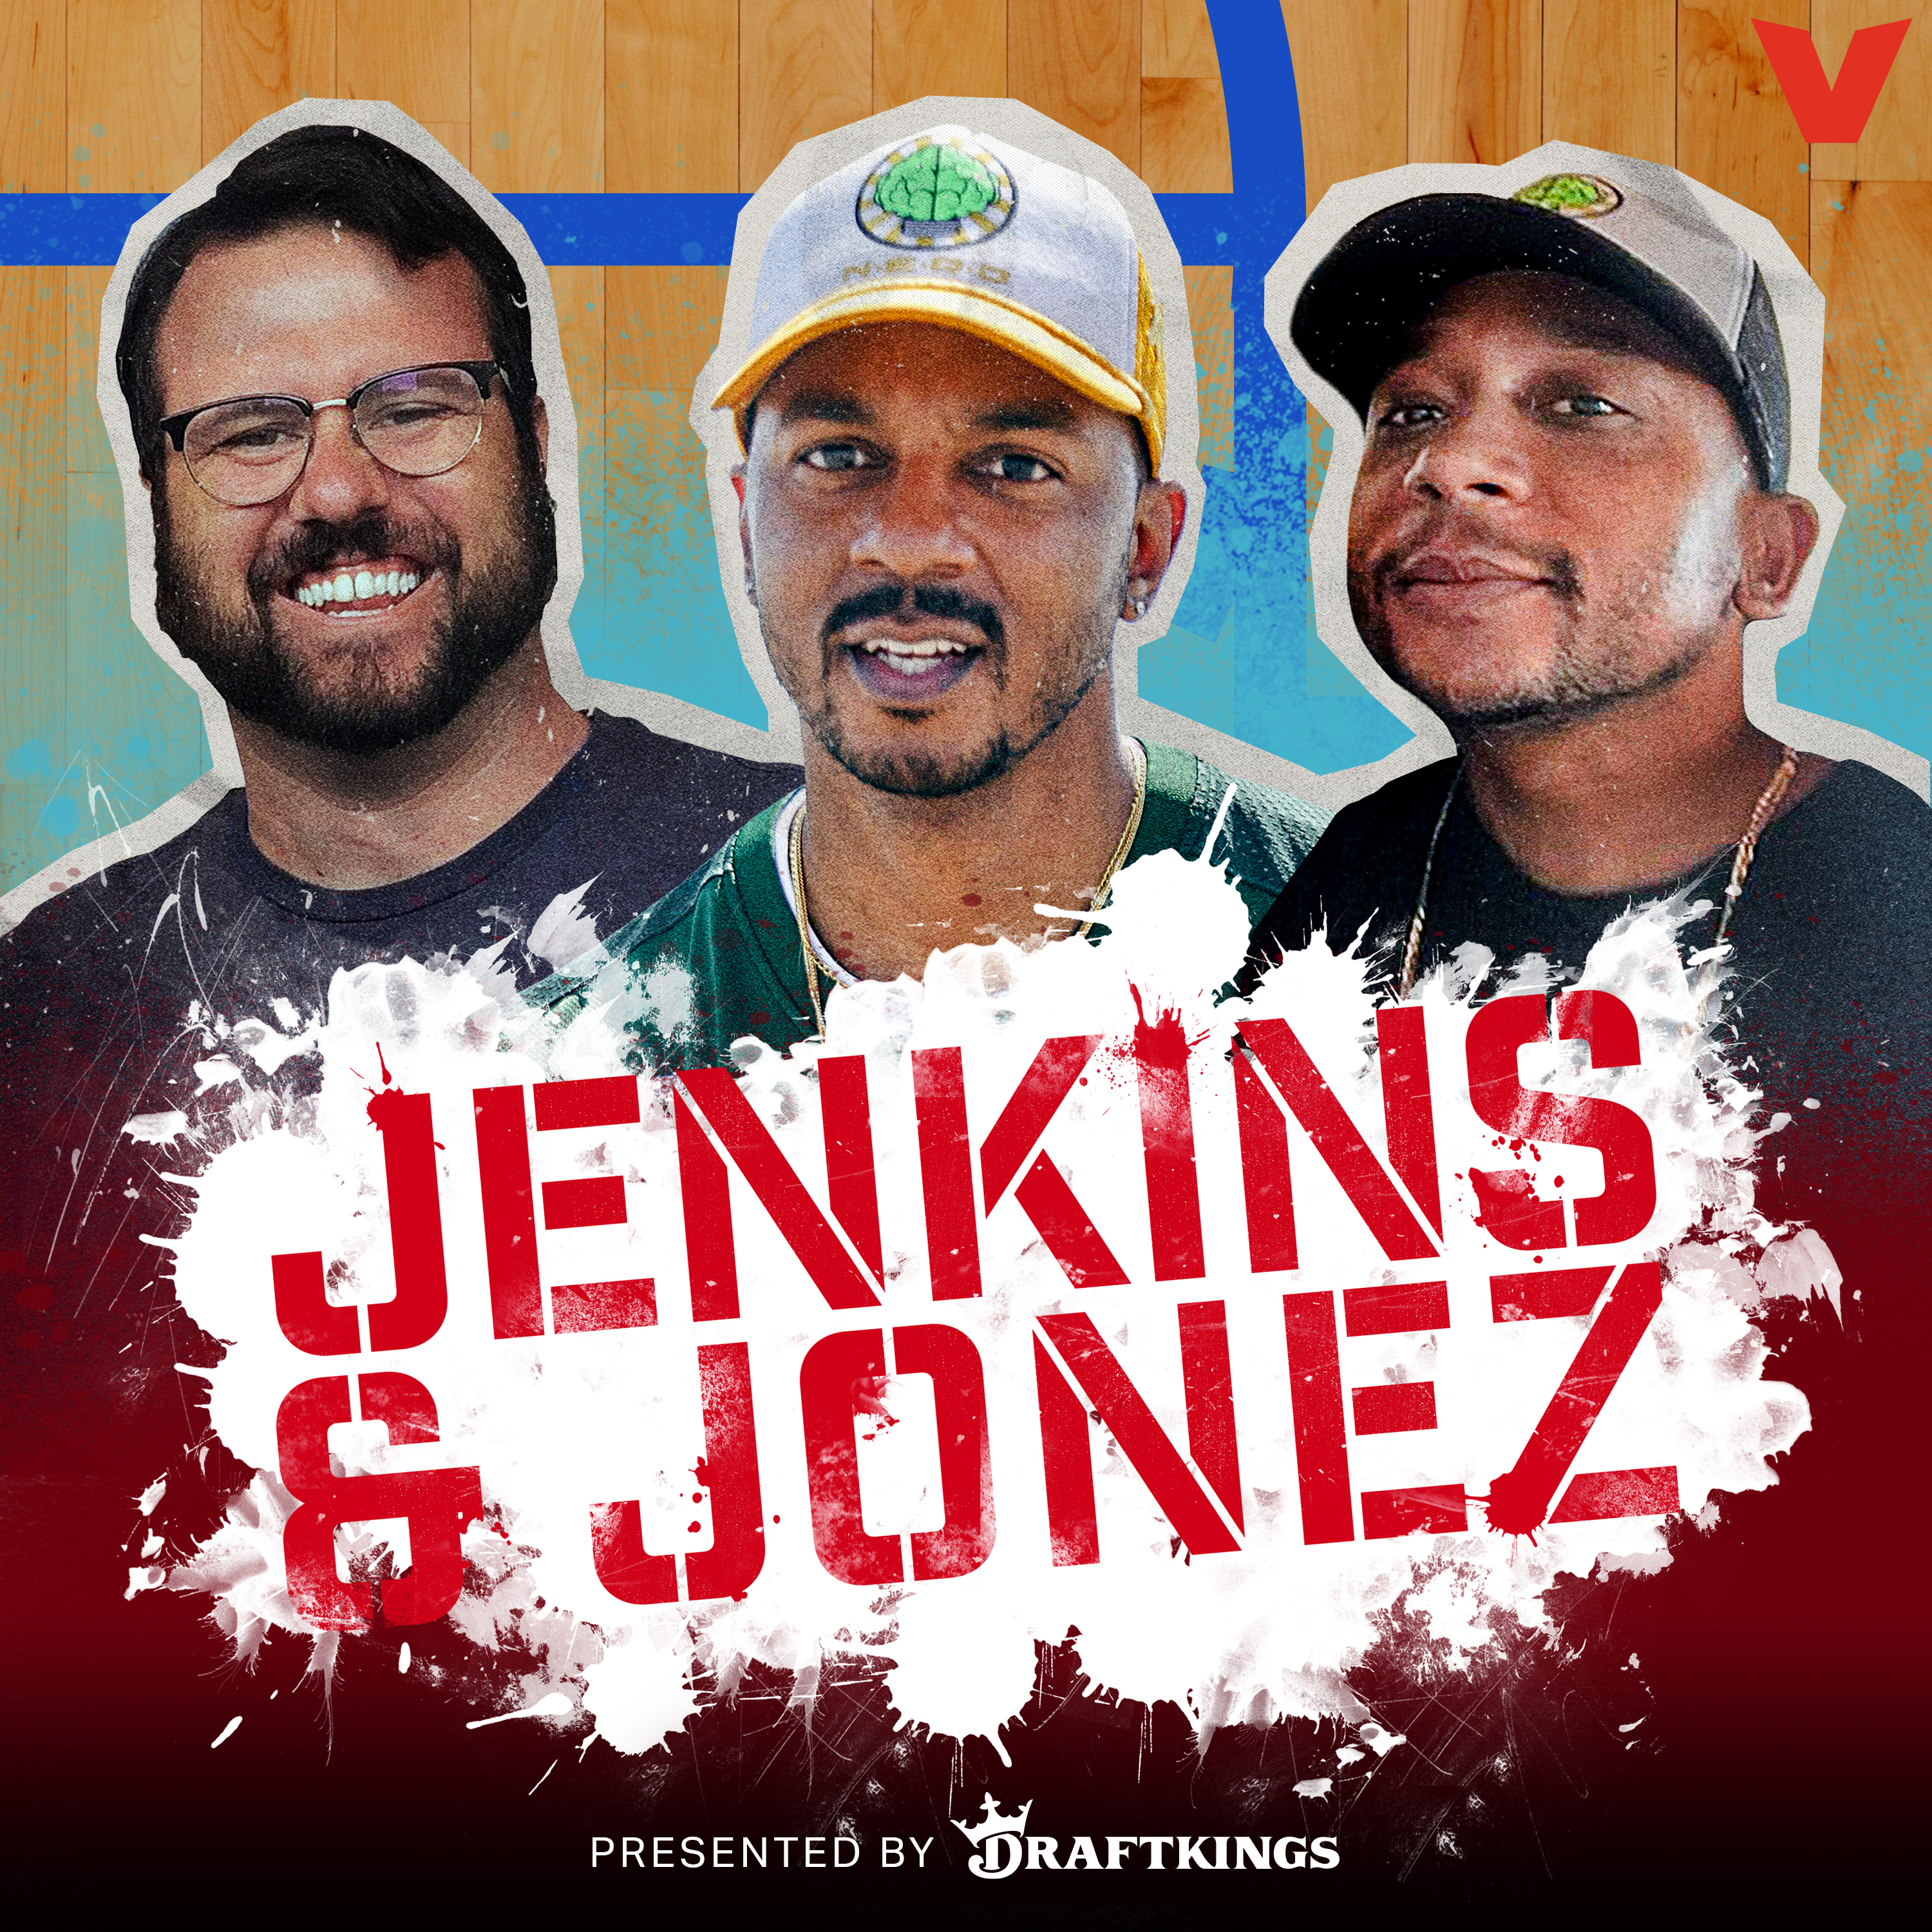 Jenkins and Jonez - Reggie Bush Back, Giant Snakes, TikTok Ban?